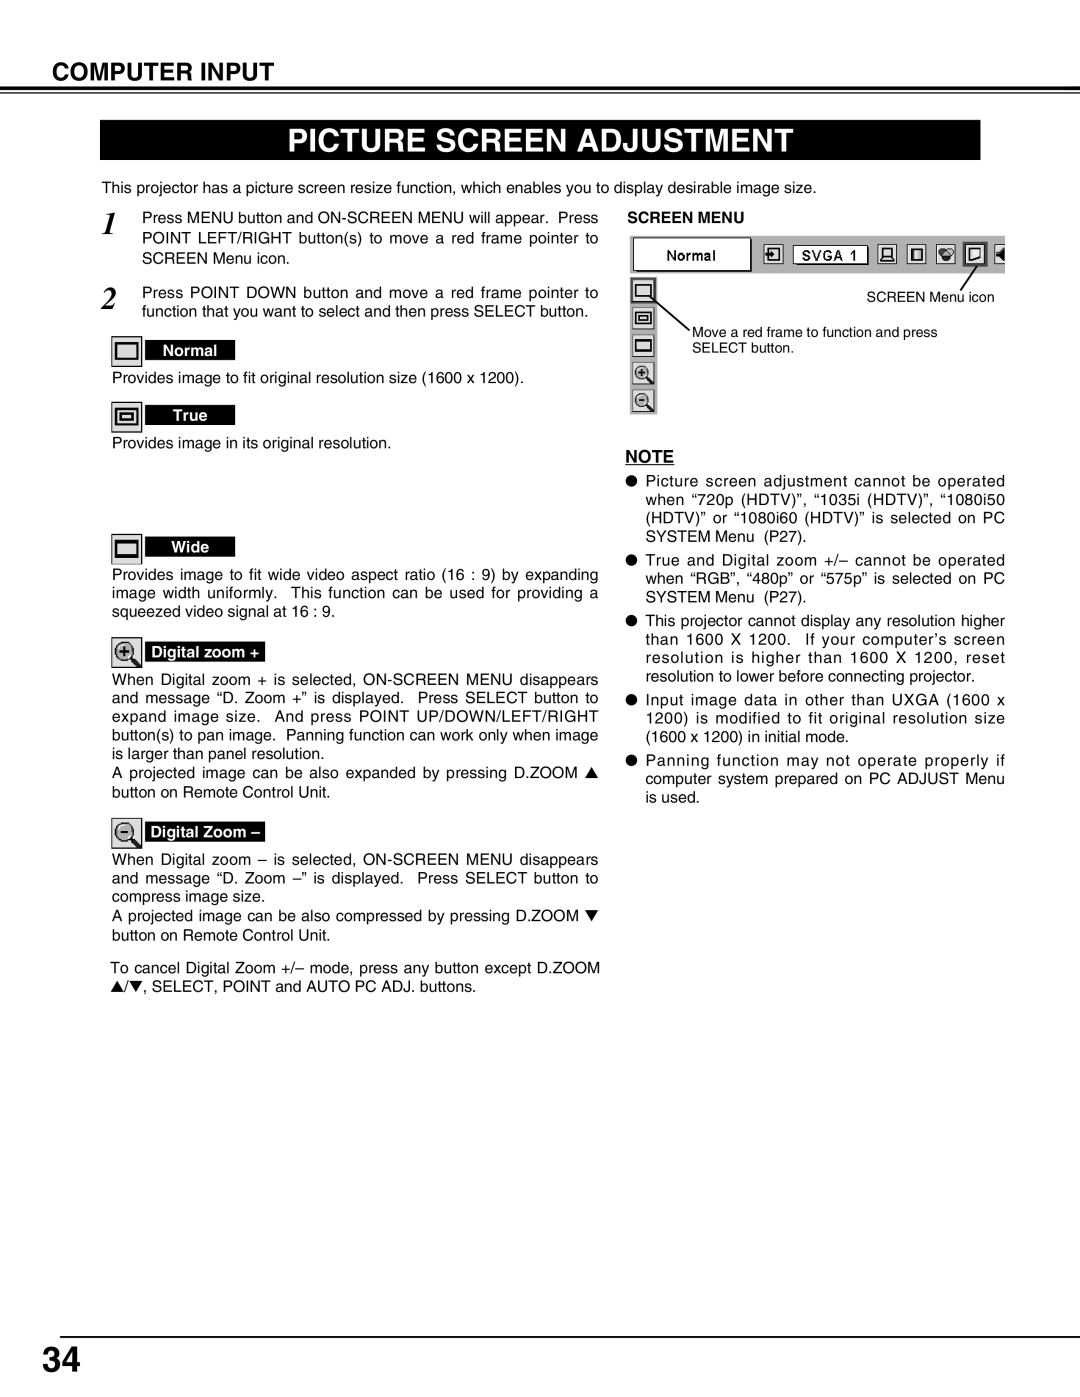 Eiki LC-UXT3 instruction manual Picture Screen Adjustment, Computer Input, Screen Menu 